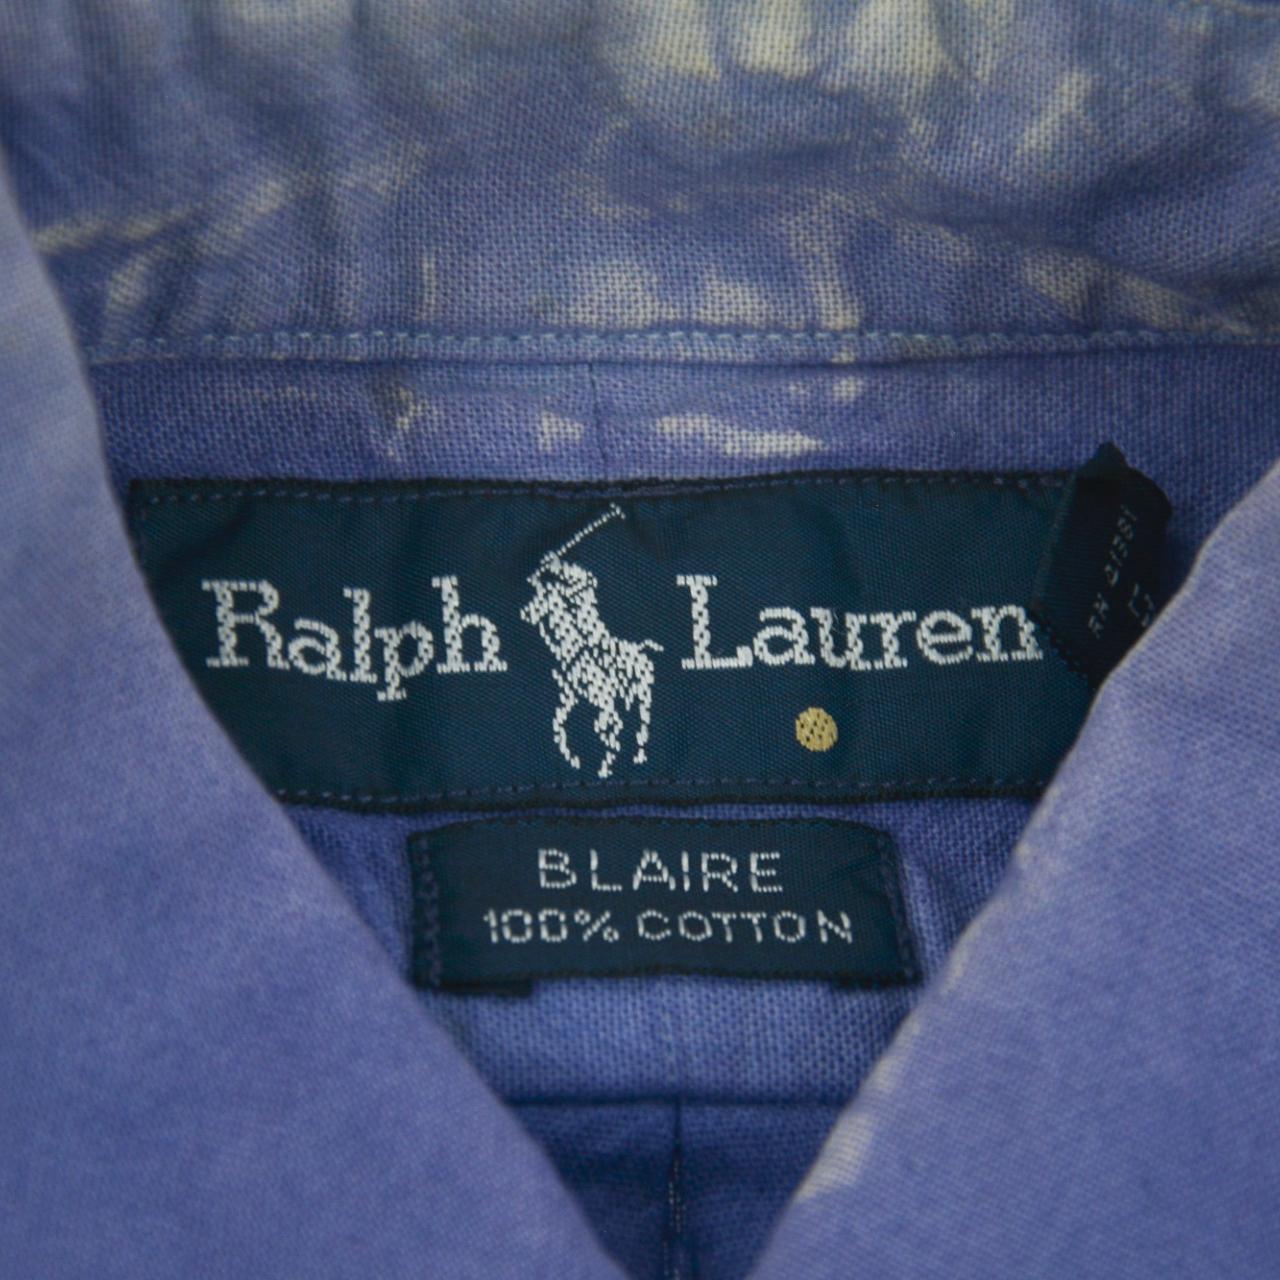 Vintage Polo Ralph Lauren USA Shirt Size L - Known Source